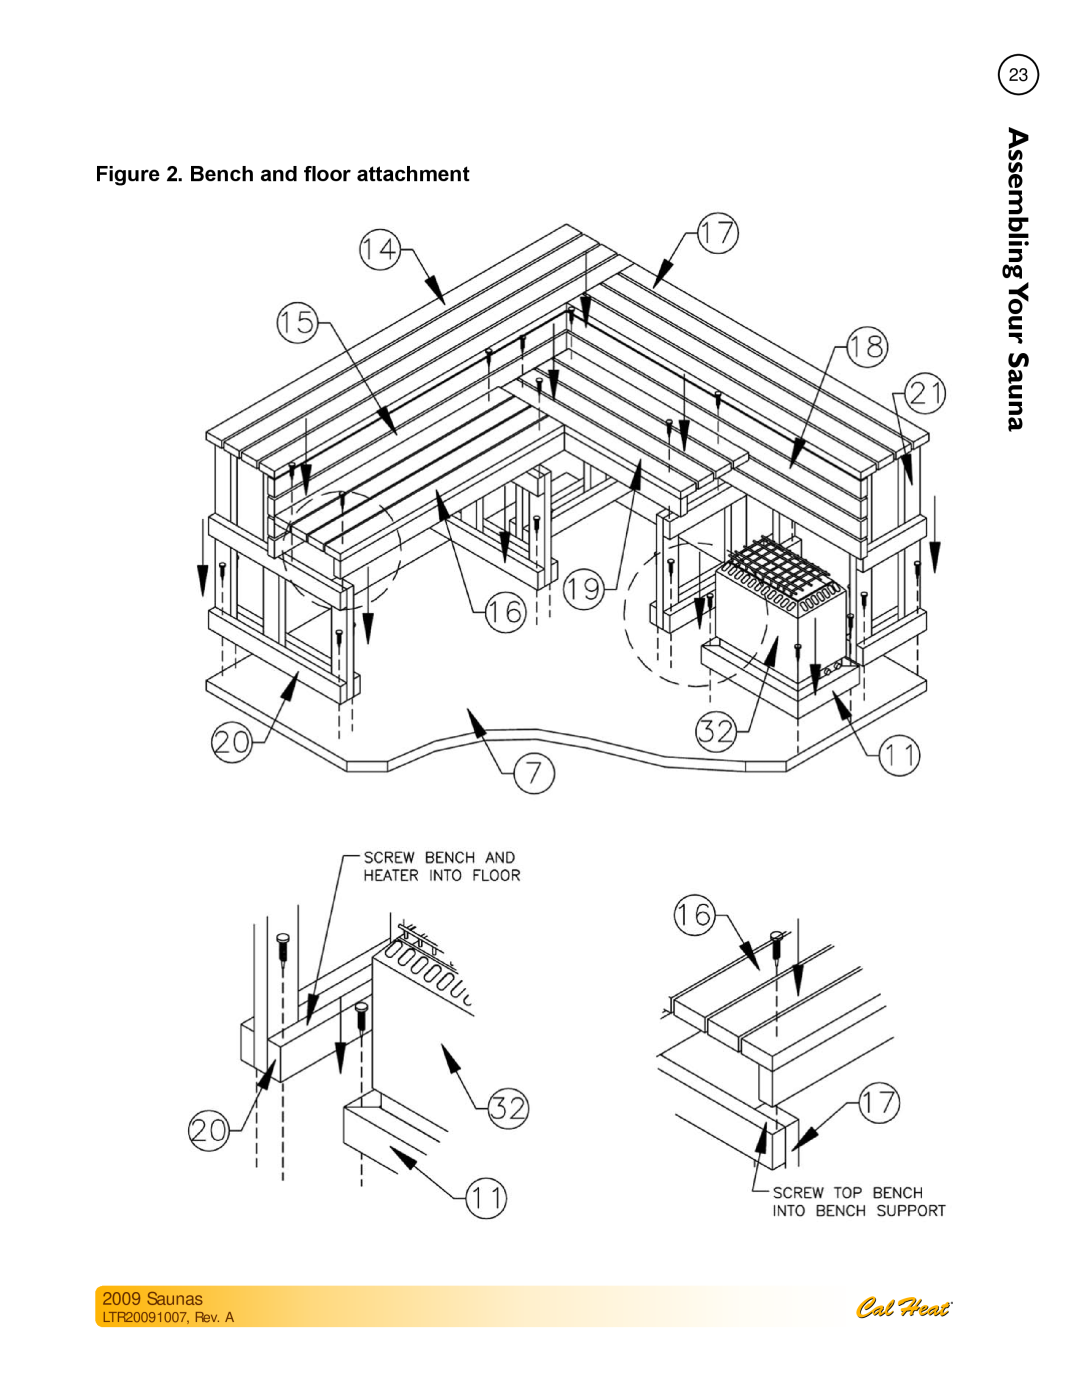 Cal Spas Saunas manual Bench and floor attachment, LTR20091007, Rev. A, AssemblingYour 